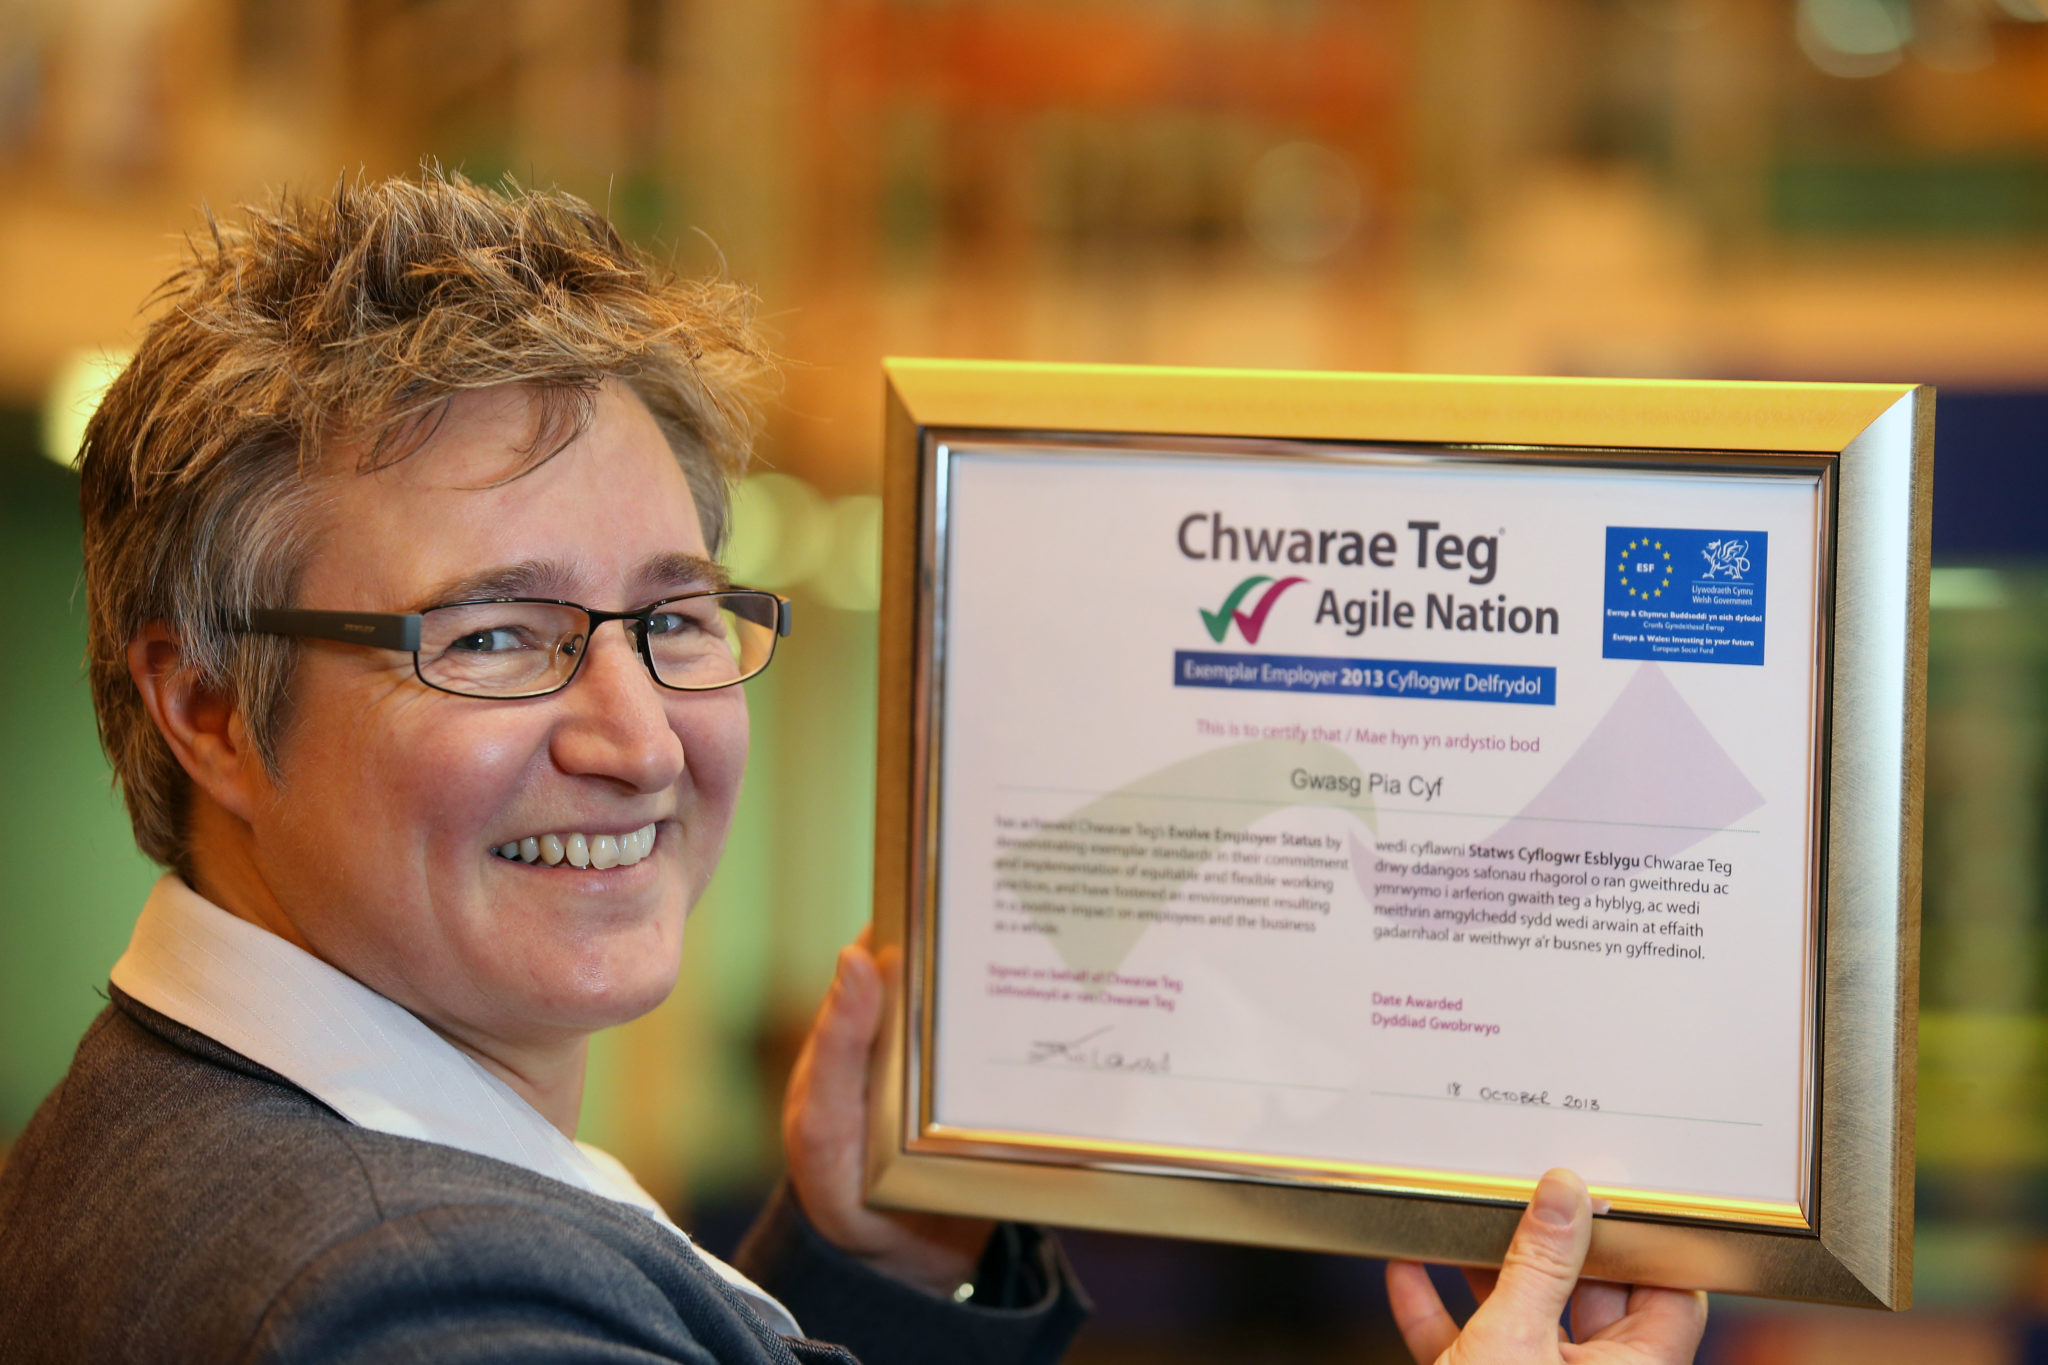 Managing director of Gwasg Pia Cyf Sharon Williams with her award from Chwarae Teg